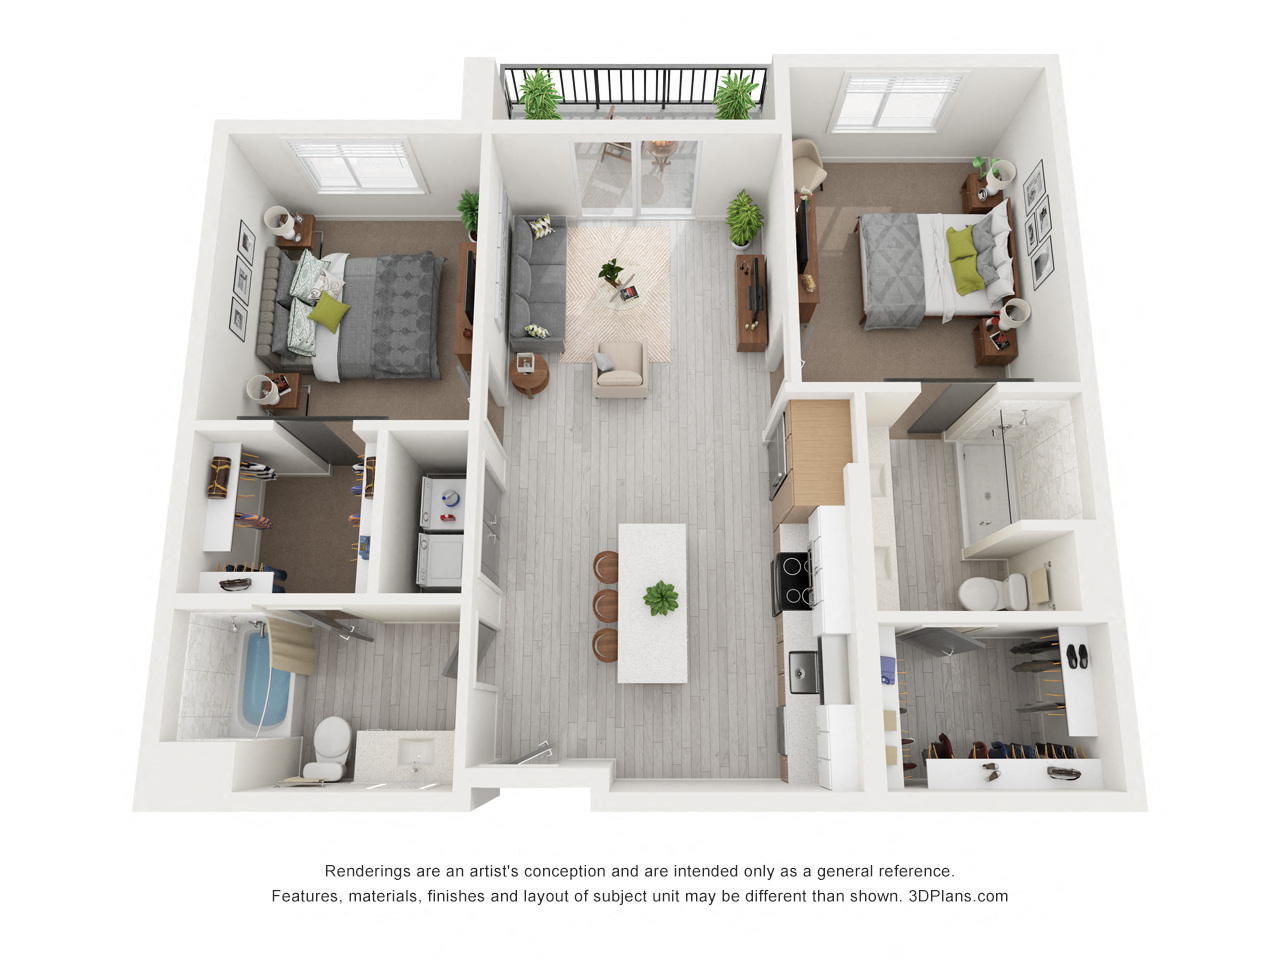 The Eisley_B3 2 bedroom floor plan